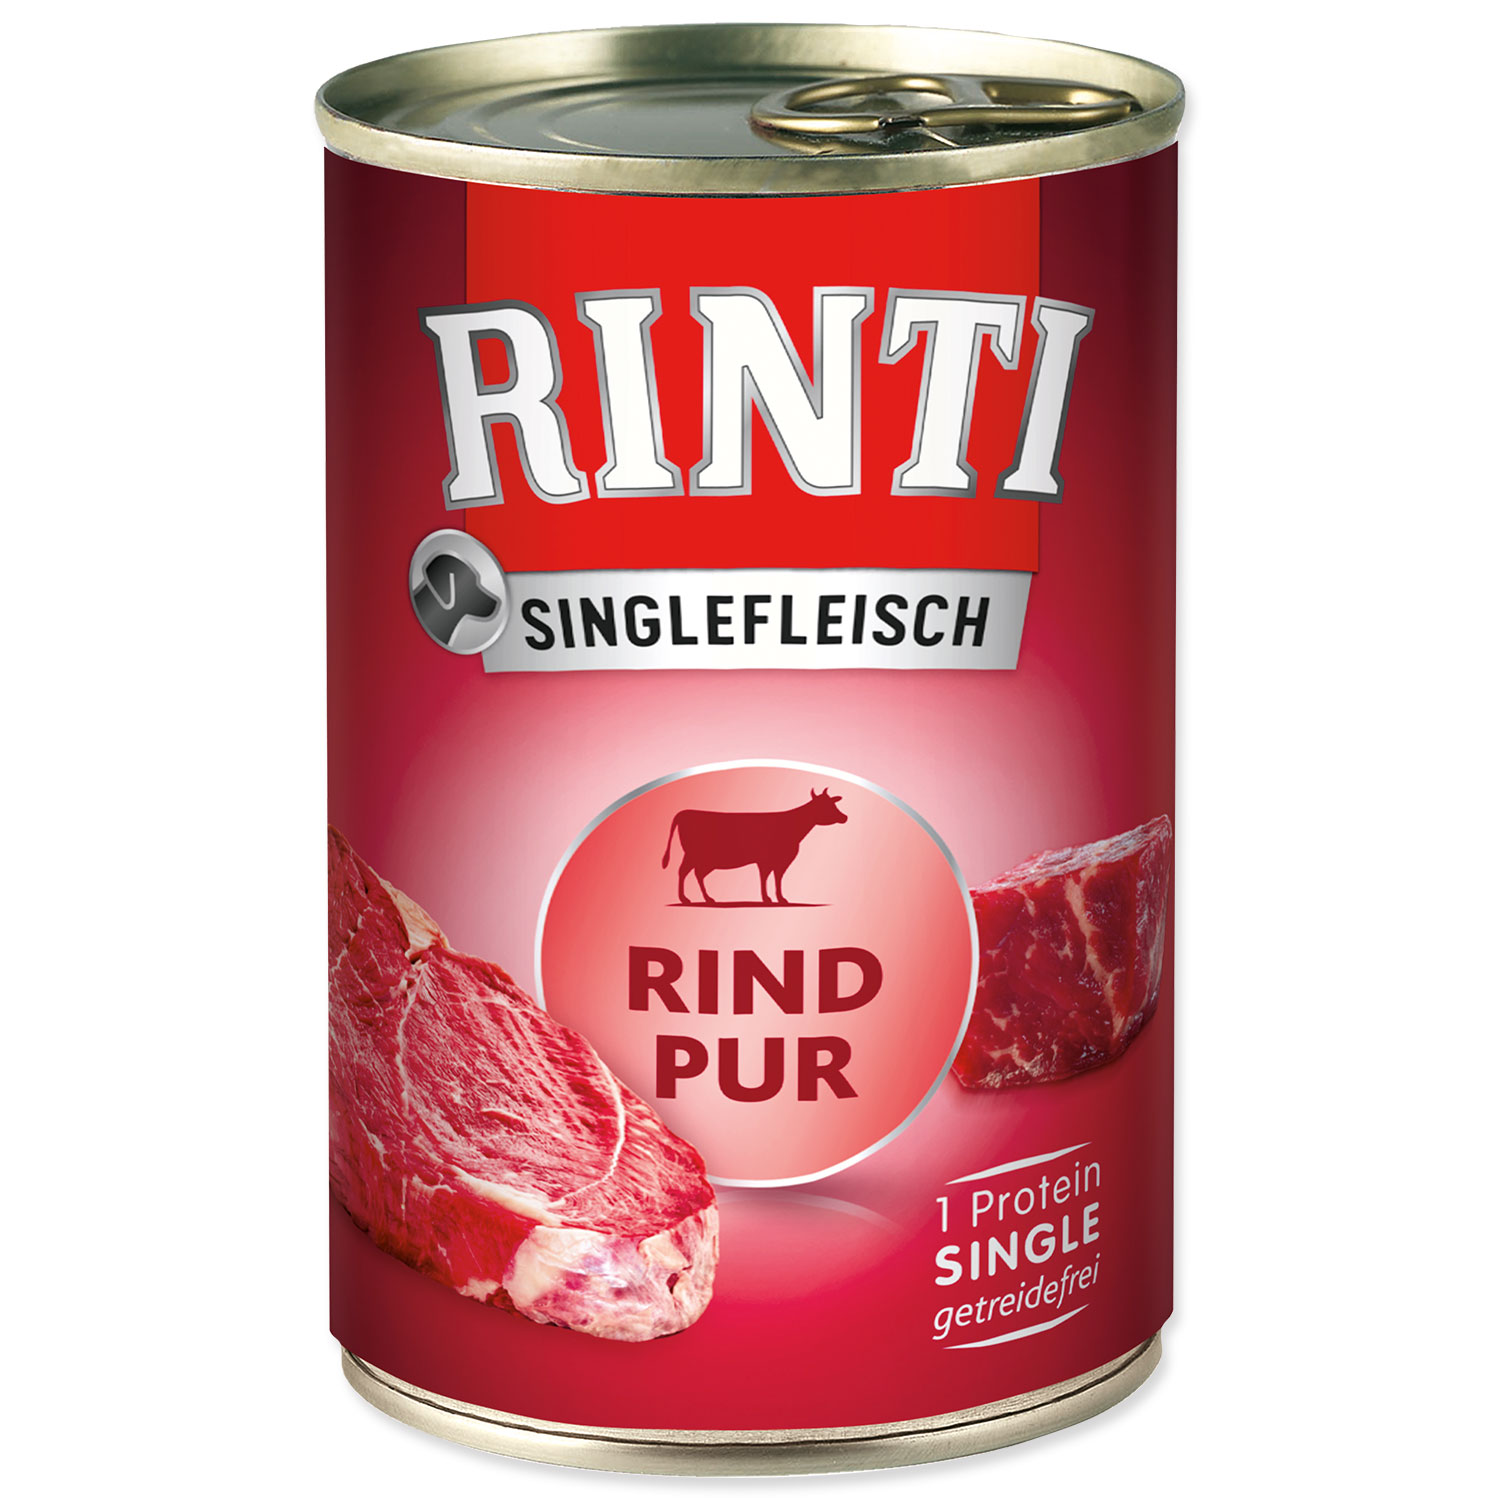 Rinti Sensible Pur, 24 X 400 G - Pakiet Mieszany